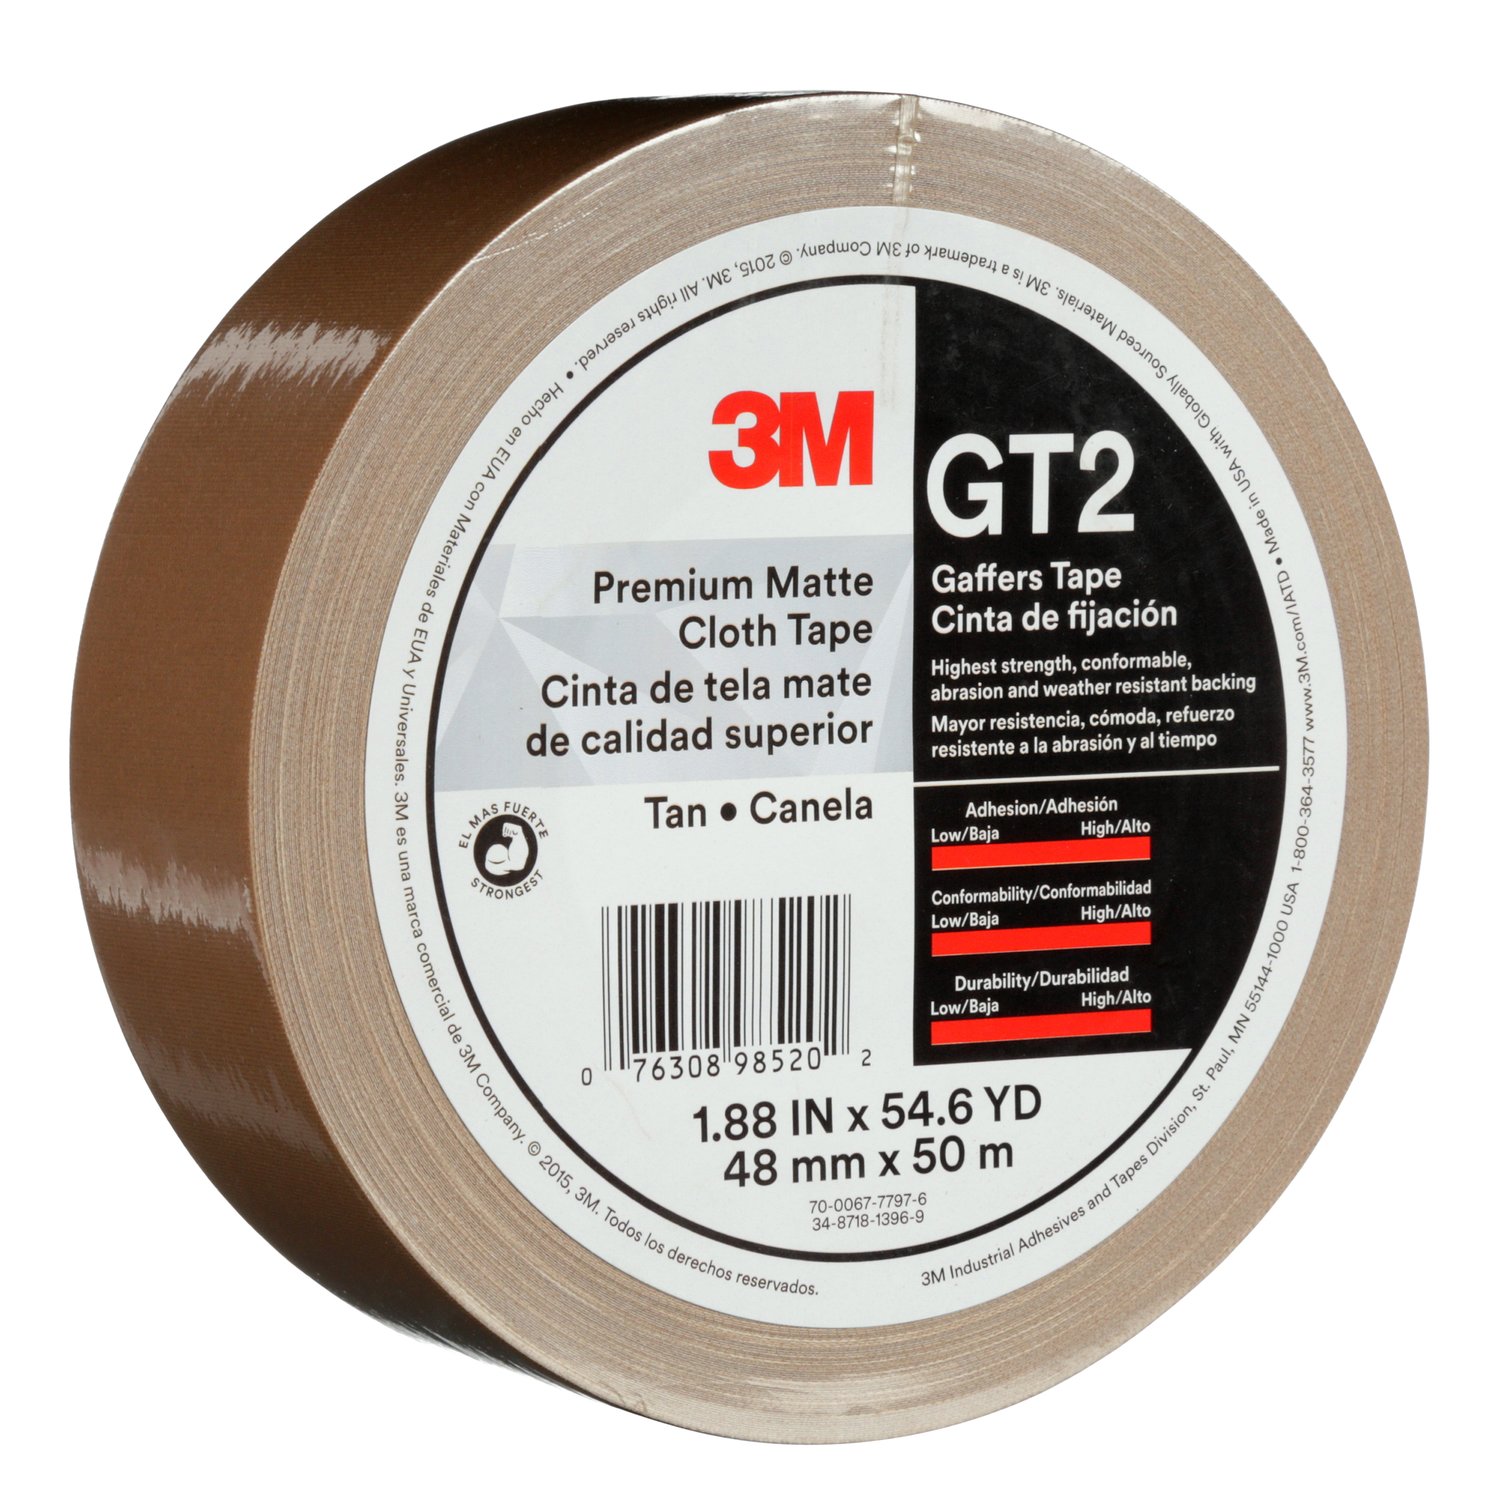 7010295700 - 3M Premium Matte Cloth (Gaffers) Tape GT2, Tan, 48 mm x 50 m, 11 mil,
24/Case